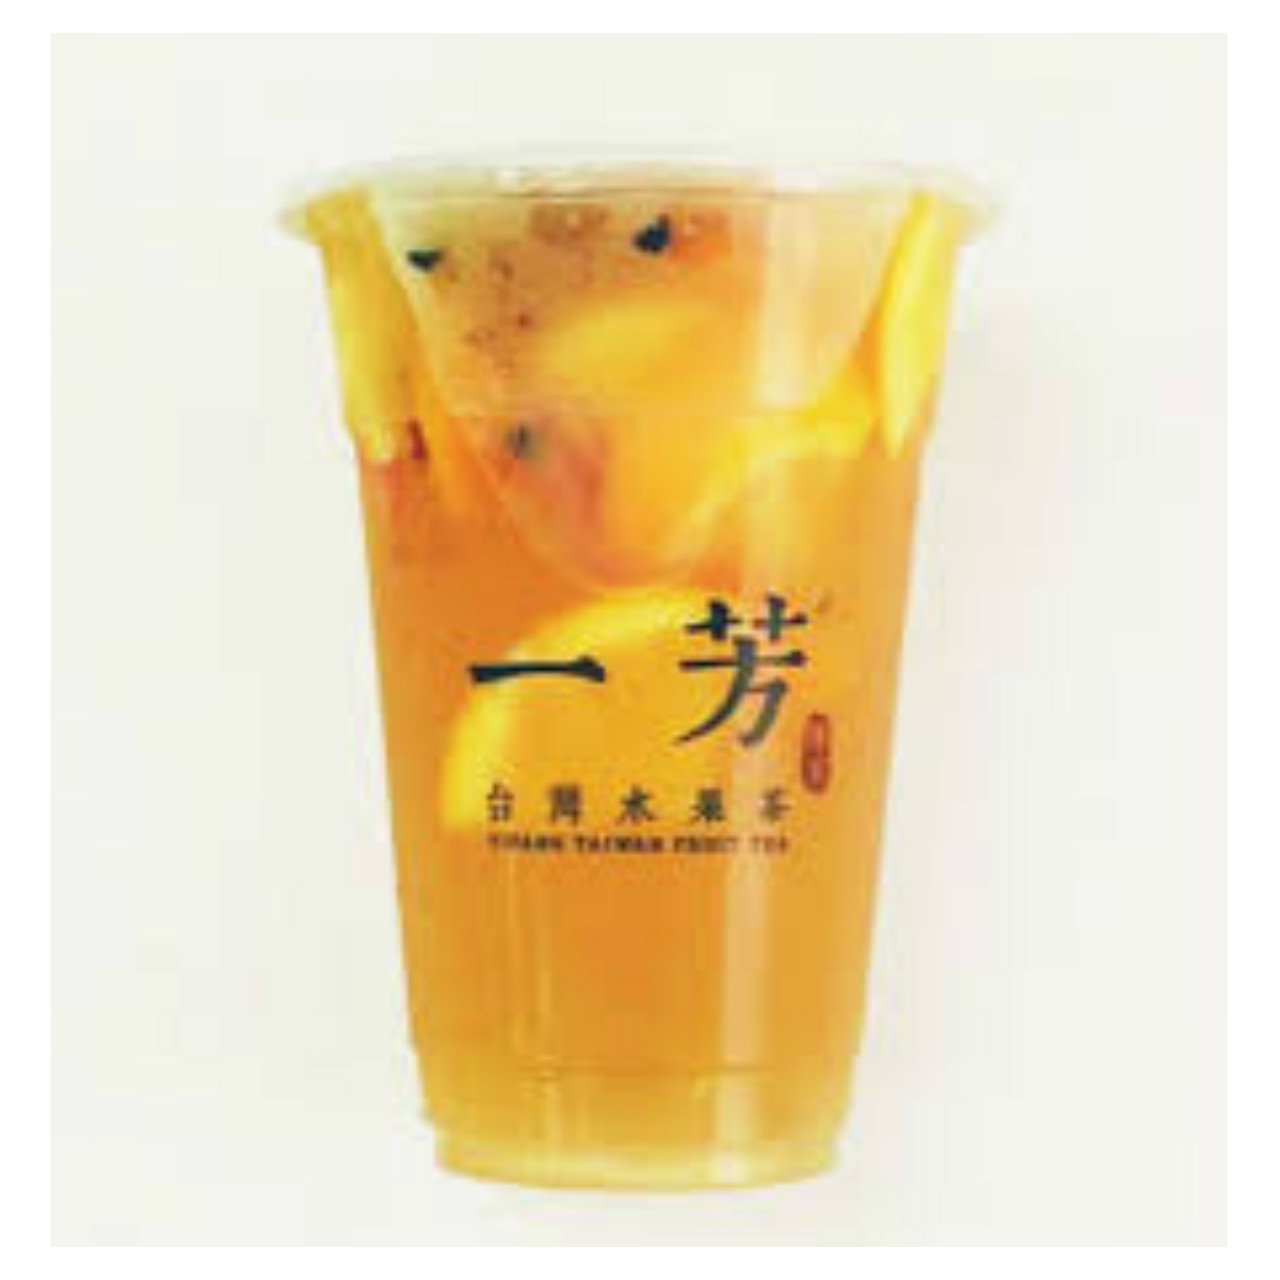 Yifang fruit tea